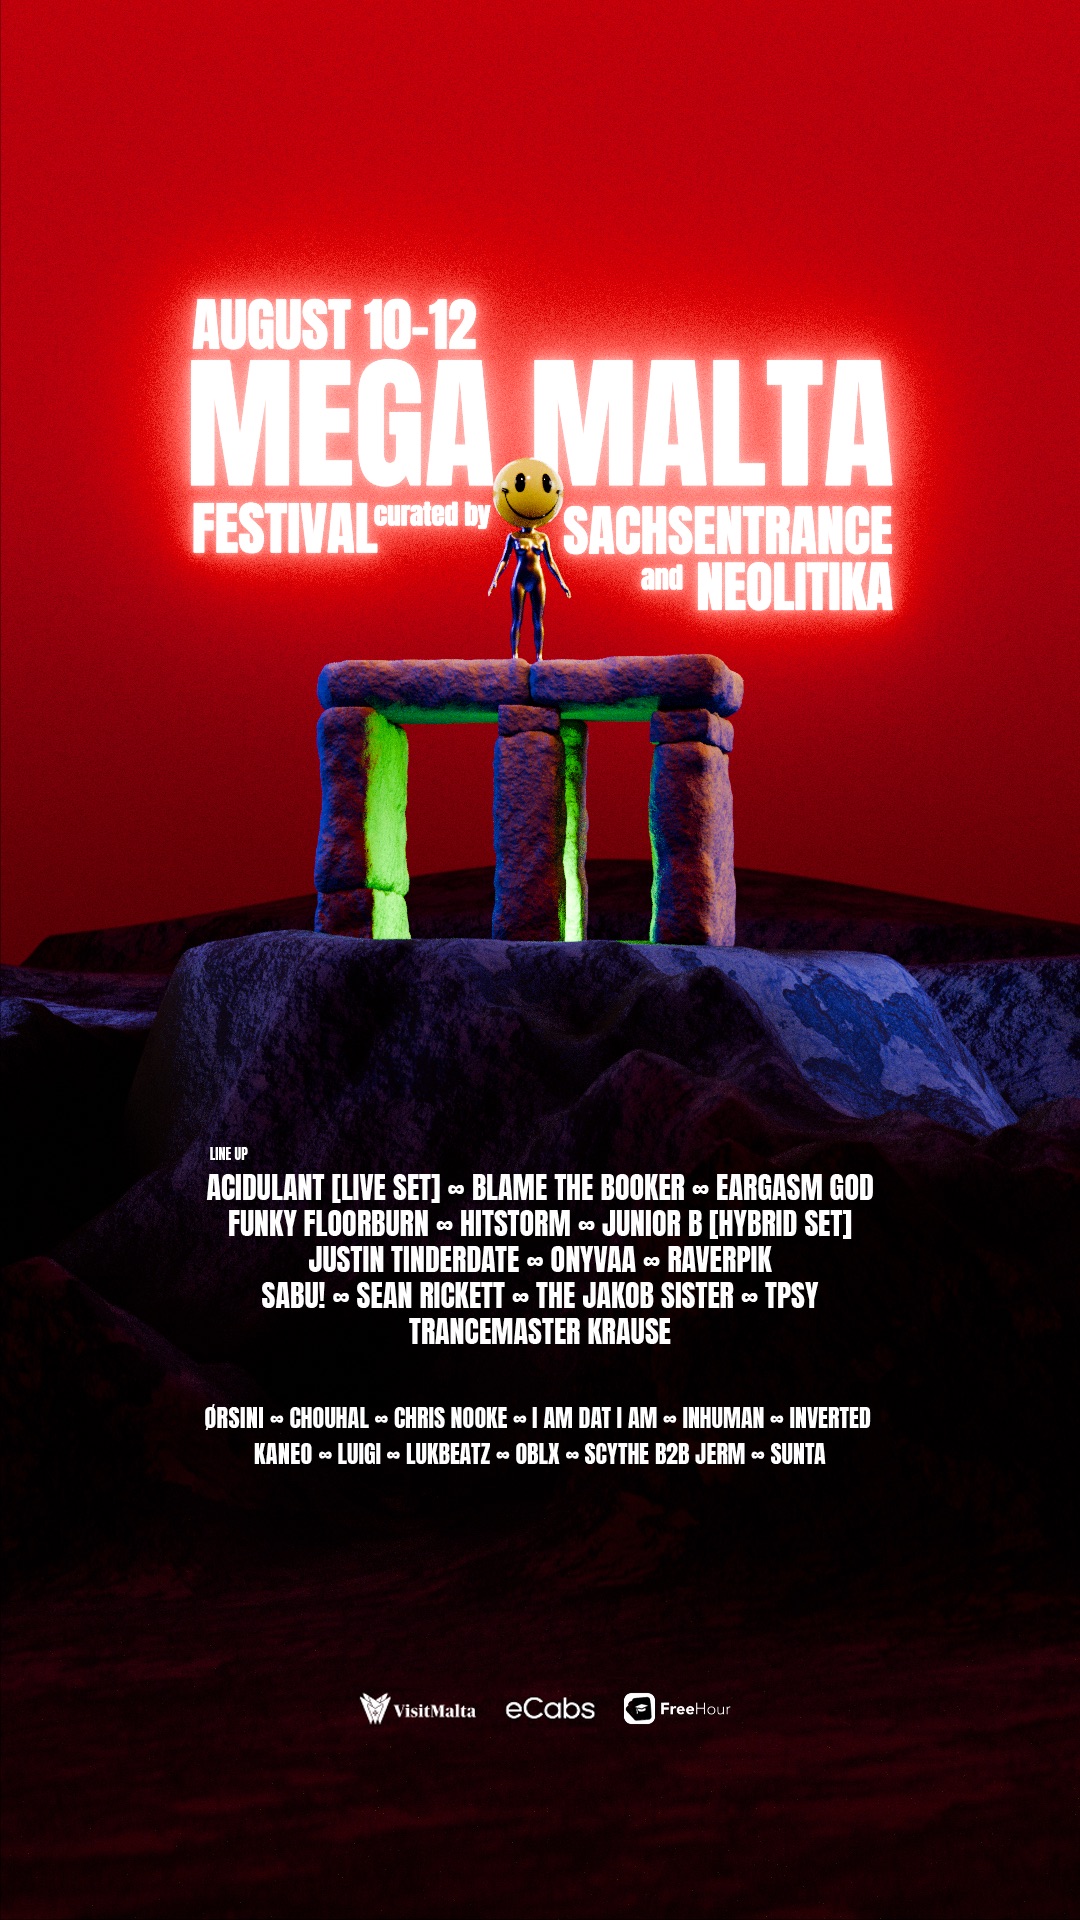 MEGA MALTA Festival